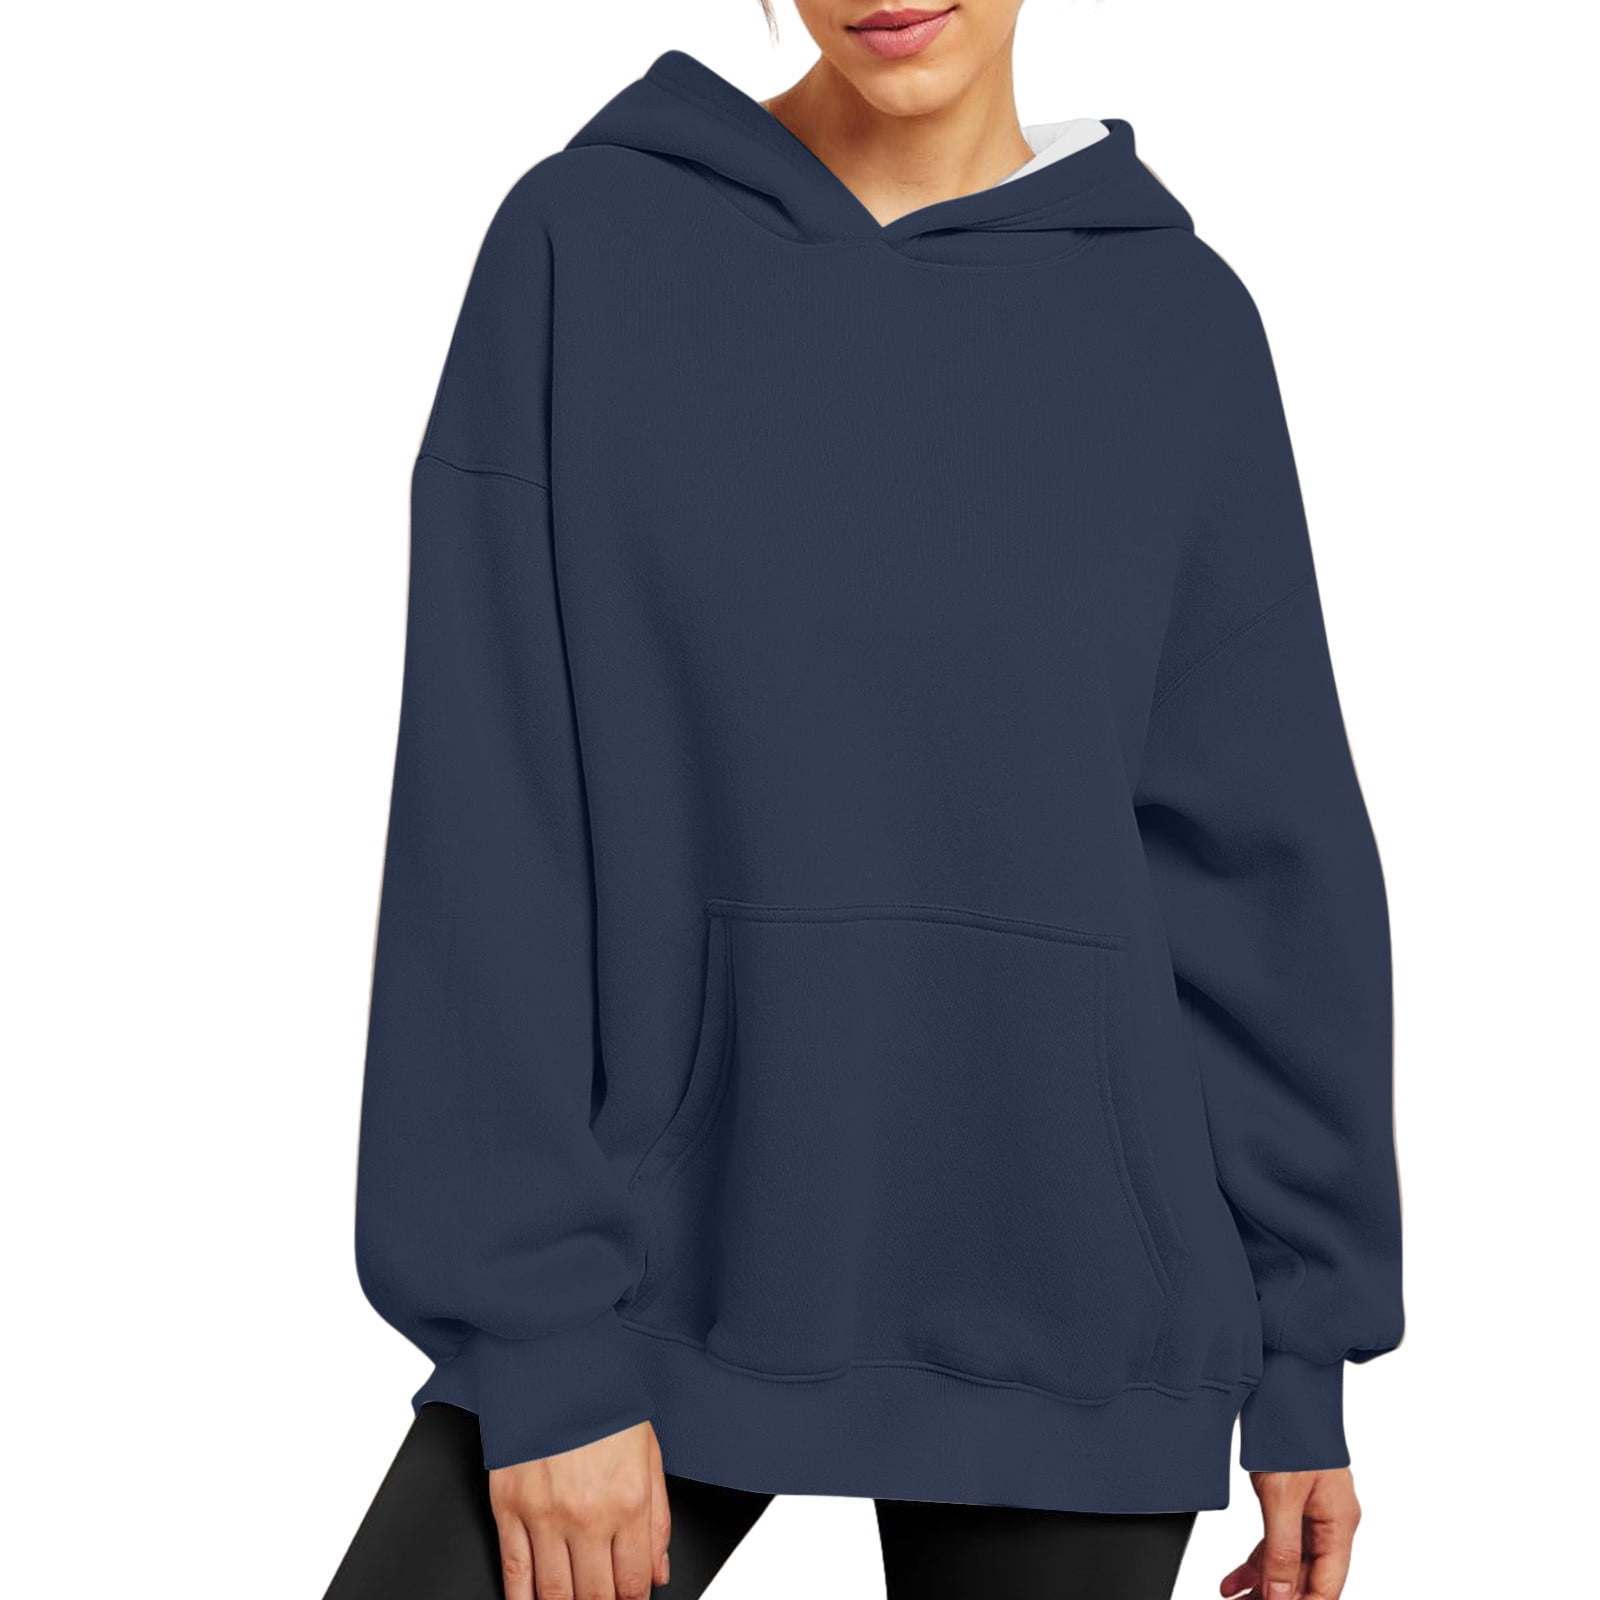 Ersazi Cropped Sweatshirts for Women Women's Fashion Solid Lace Off Shoulder Short Sleeve Casual Loose Top on Clearance Dark Gray Oversized Sweatshirt